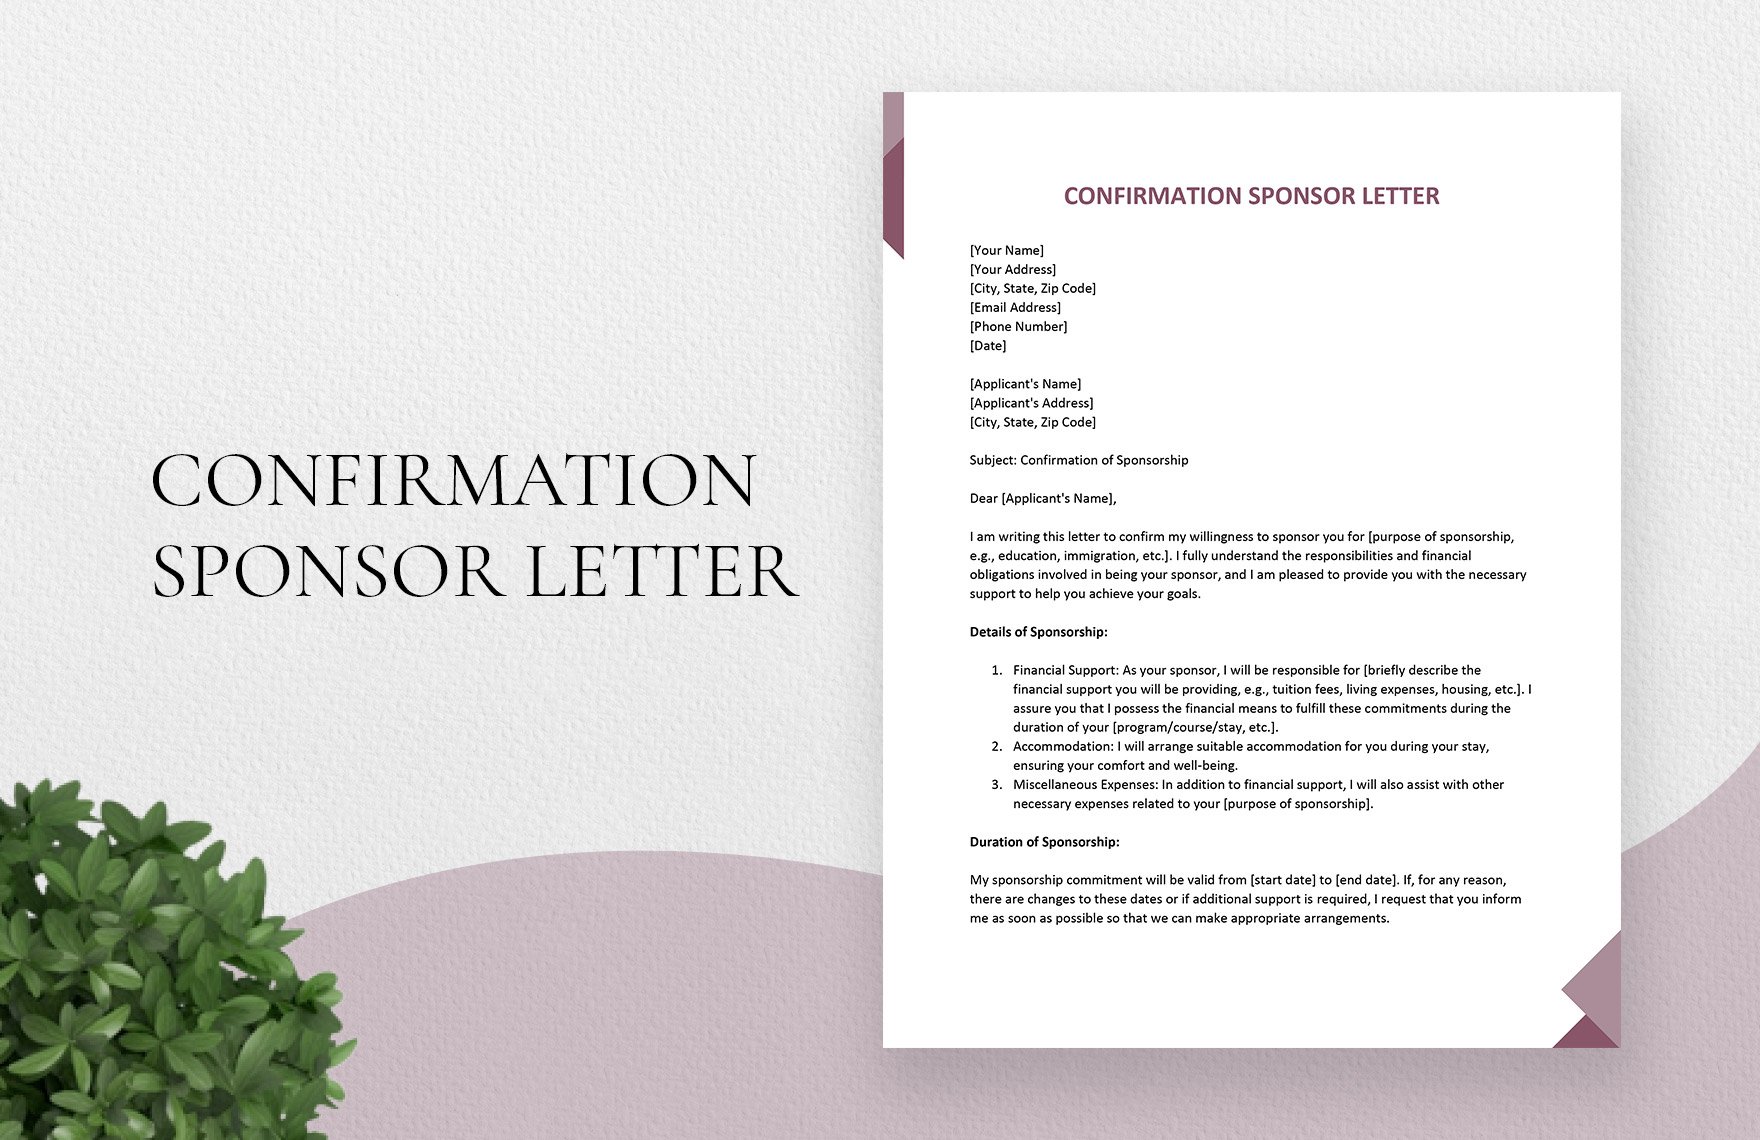 Confirmation Sponsor Letter in Word, Google Docs, Apple Pages